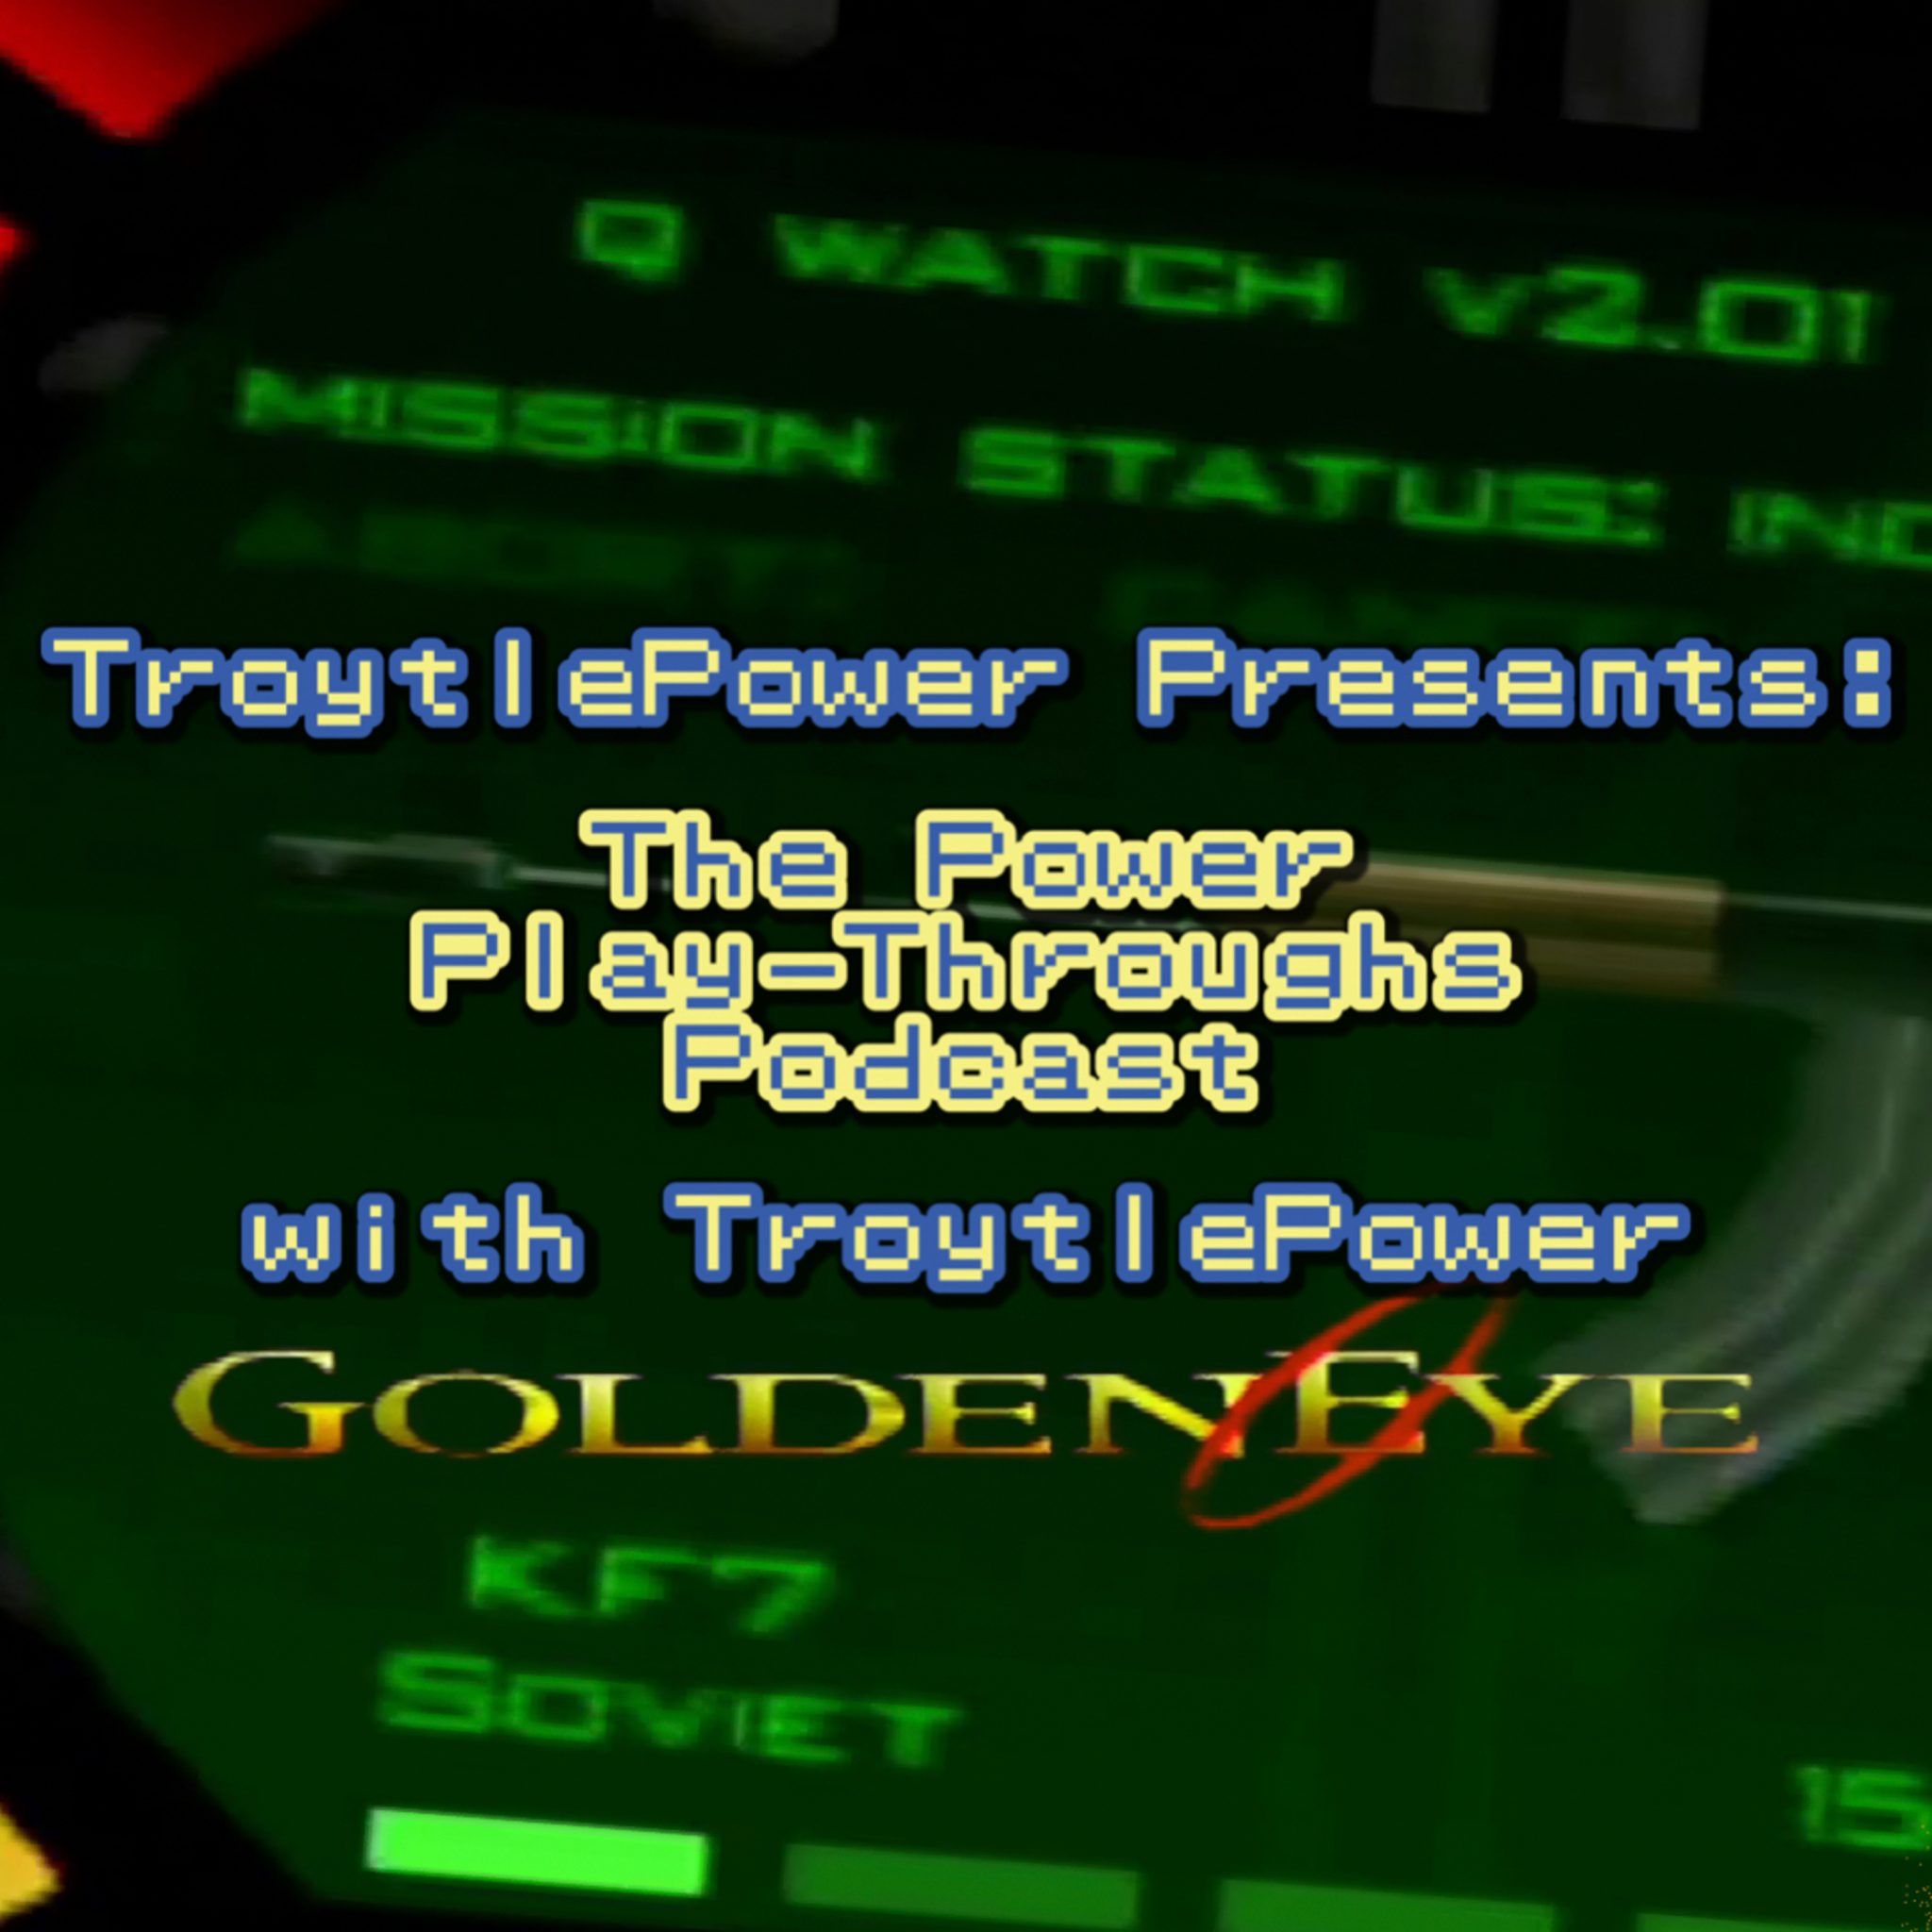 Goldeneye (Nintendo 64), Part 2